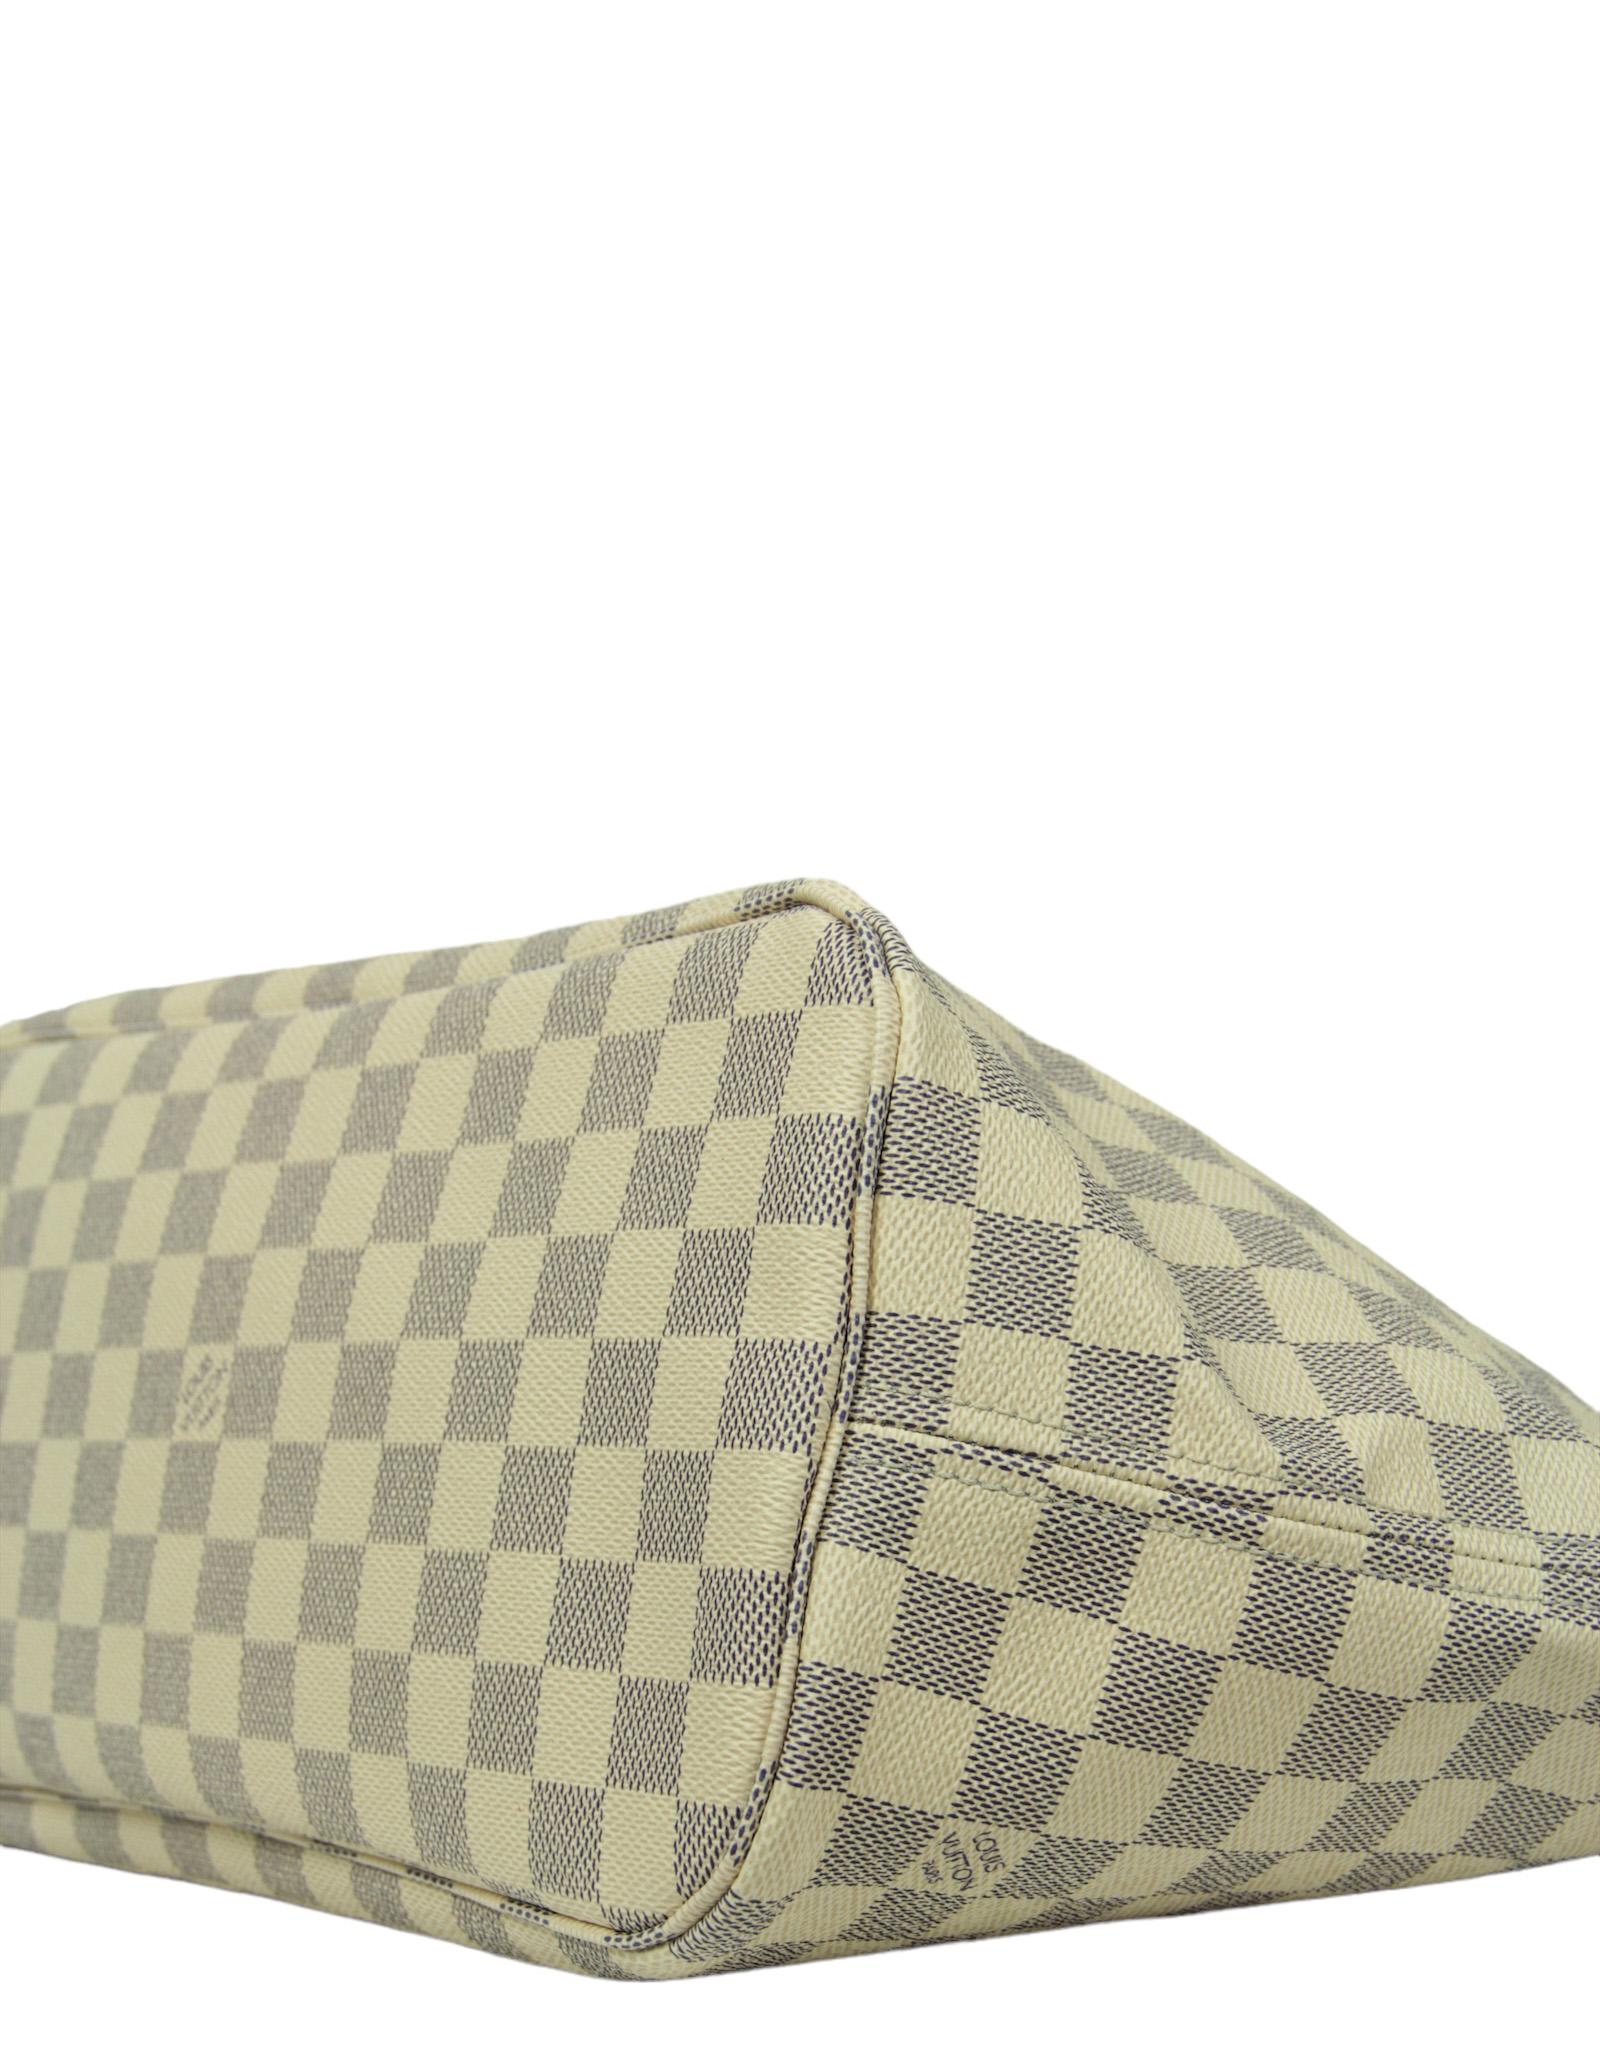 Louis Vuitton Damier Azur Neverfull MM Tote Bag For Sale 2